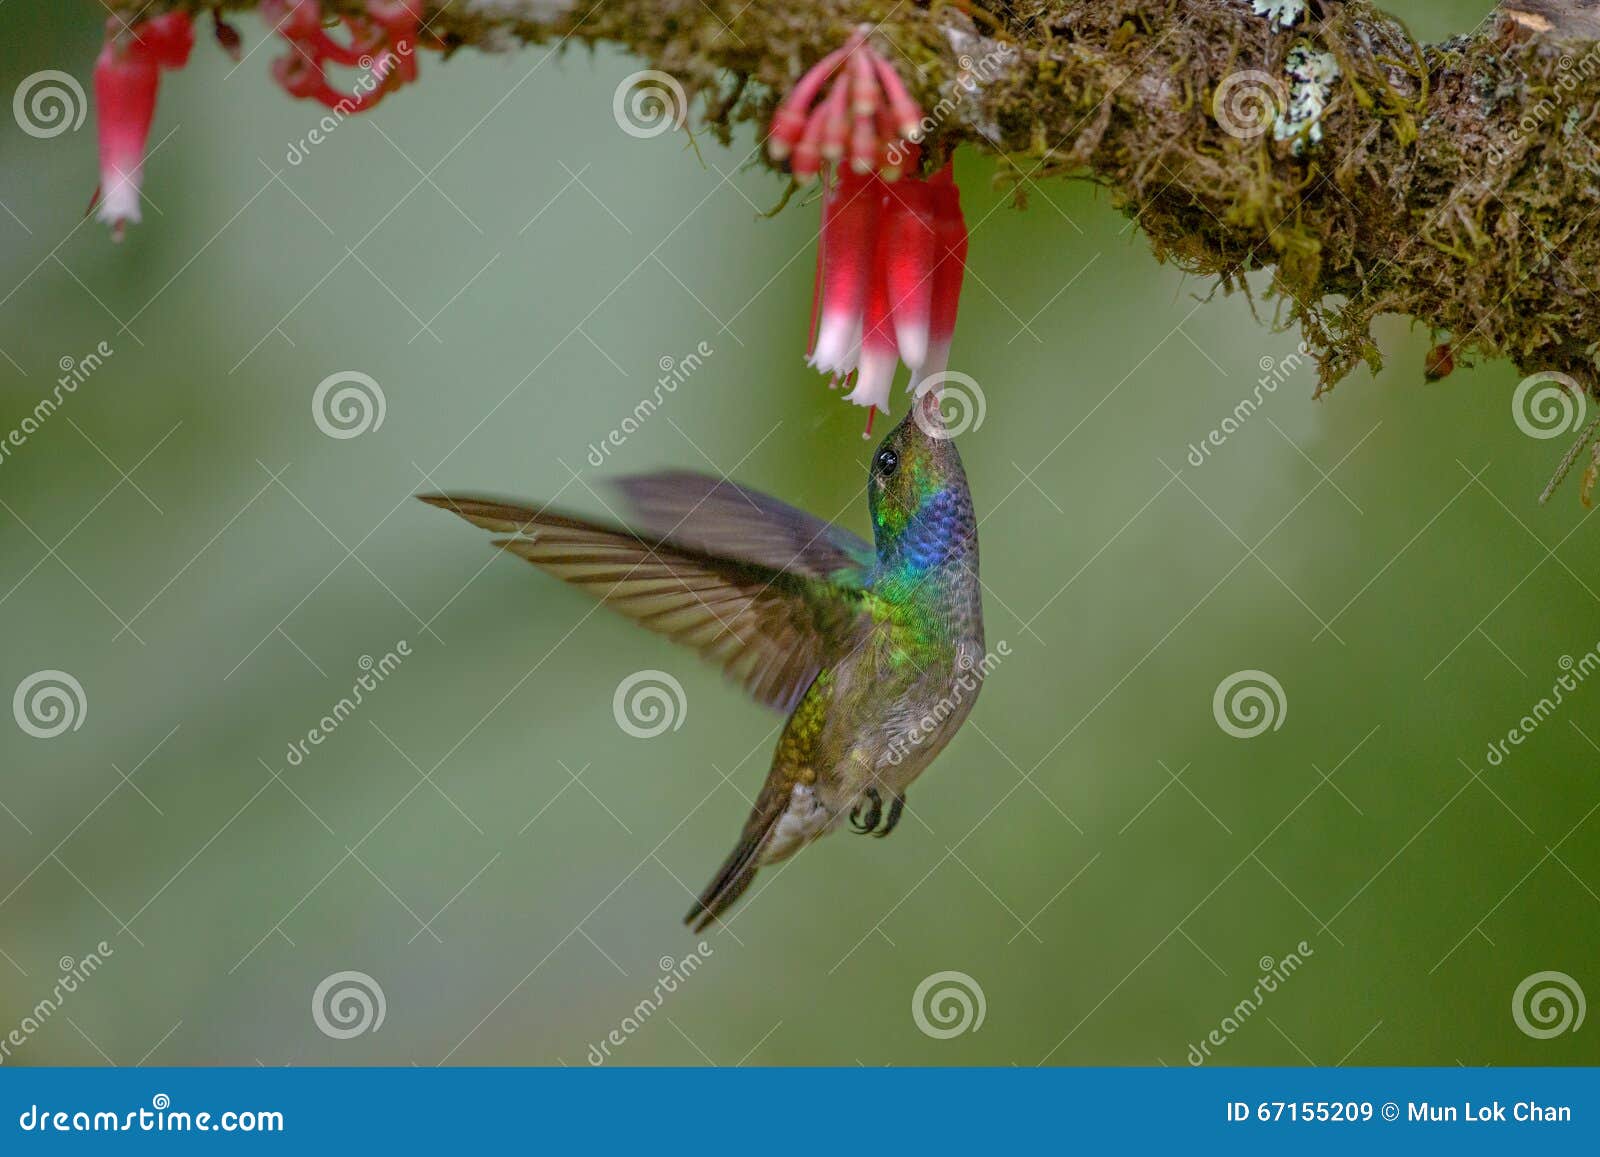 charming hummingbird in costa rica